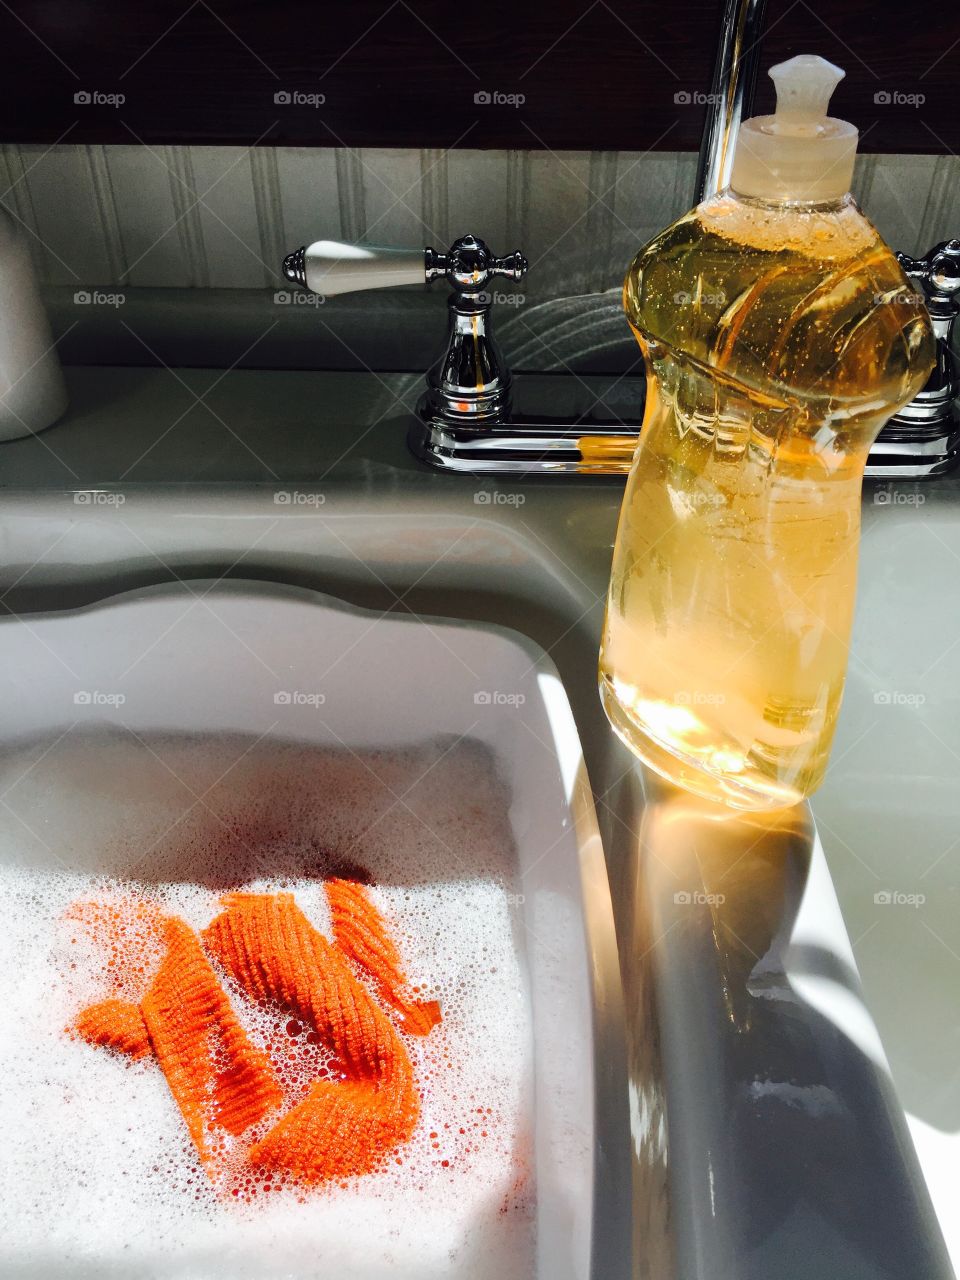 Orange Color Story - orange dish soap and dish rag